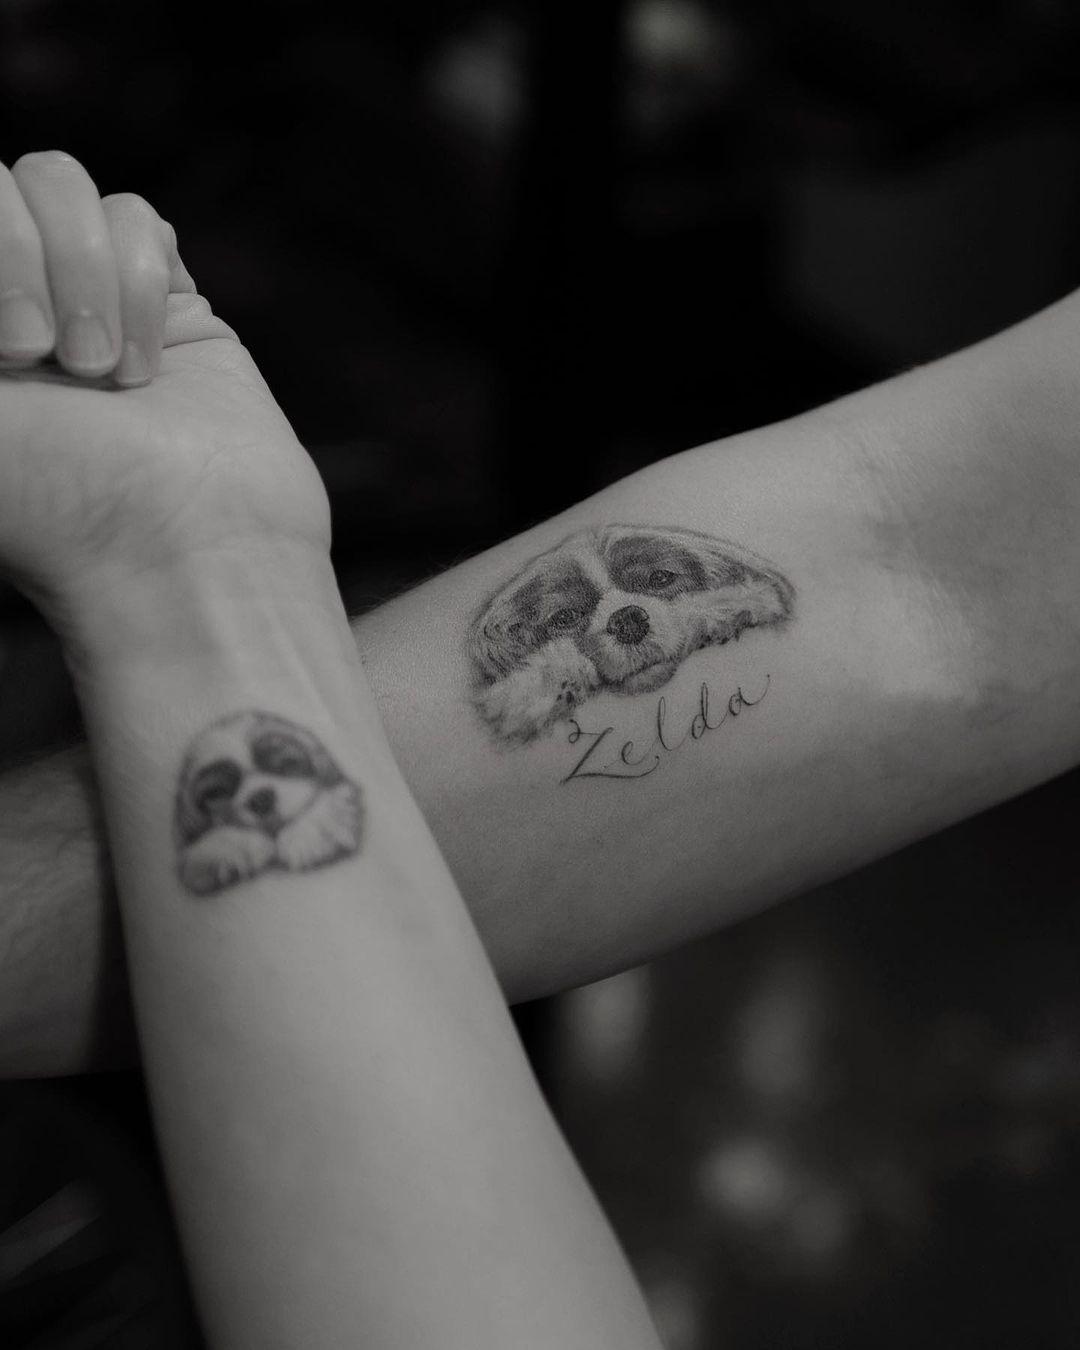 Seth Rogen and wife Lauren Miller dedicate new tattoo to late dog Zelda